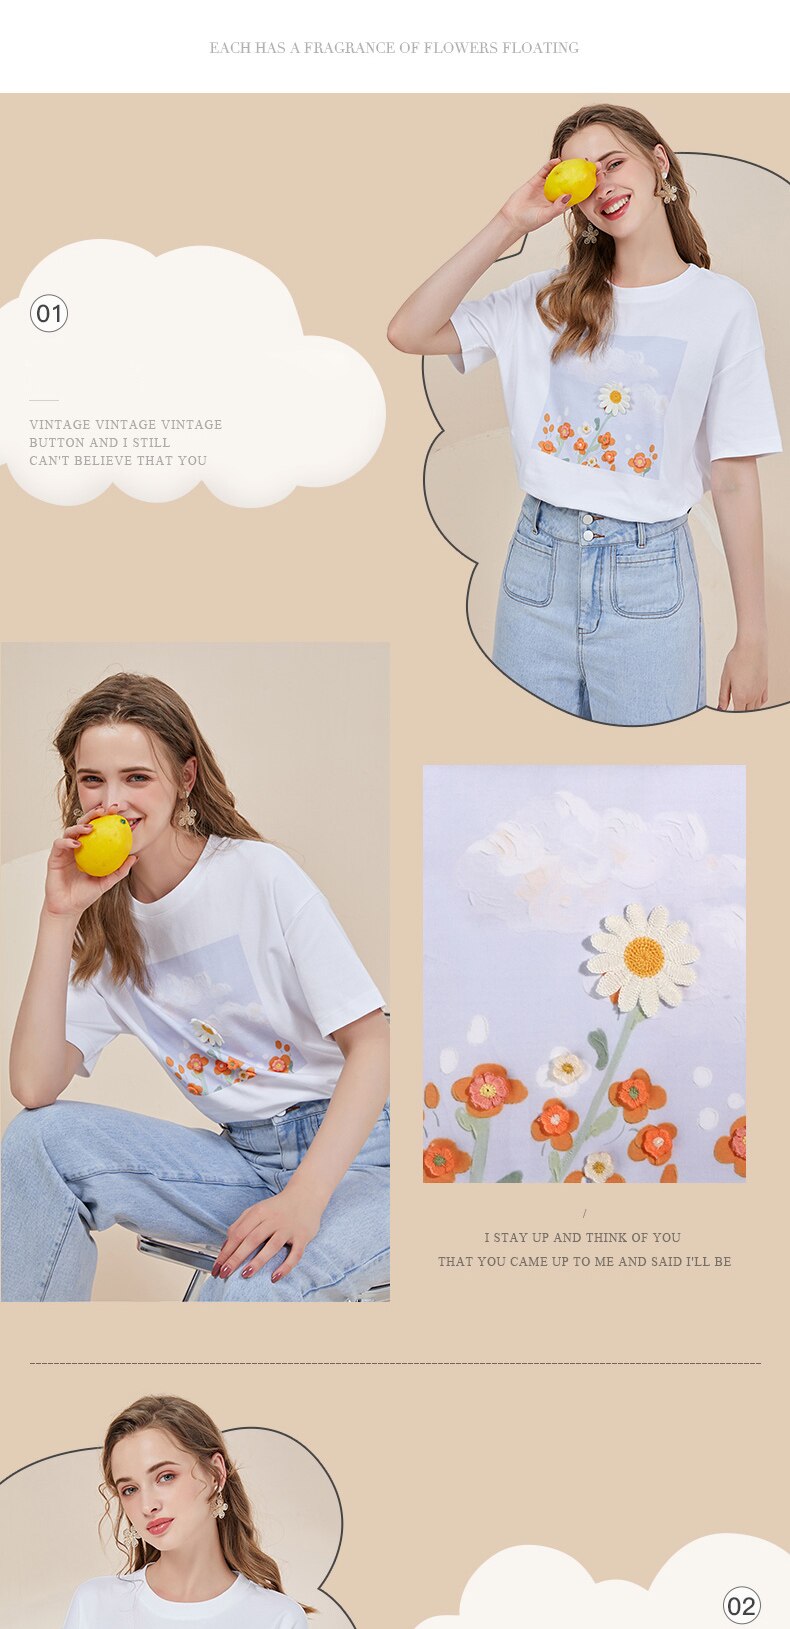 ARTKA 2021 Summer New Women T-shirt 100% Cotton Elegant Flower Embroidery T-shirts O-Neck Short Sleeve White T-shirts TA28019X